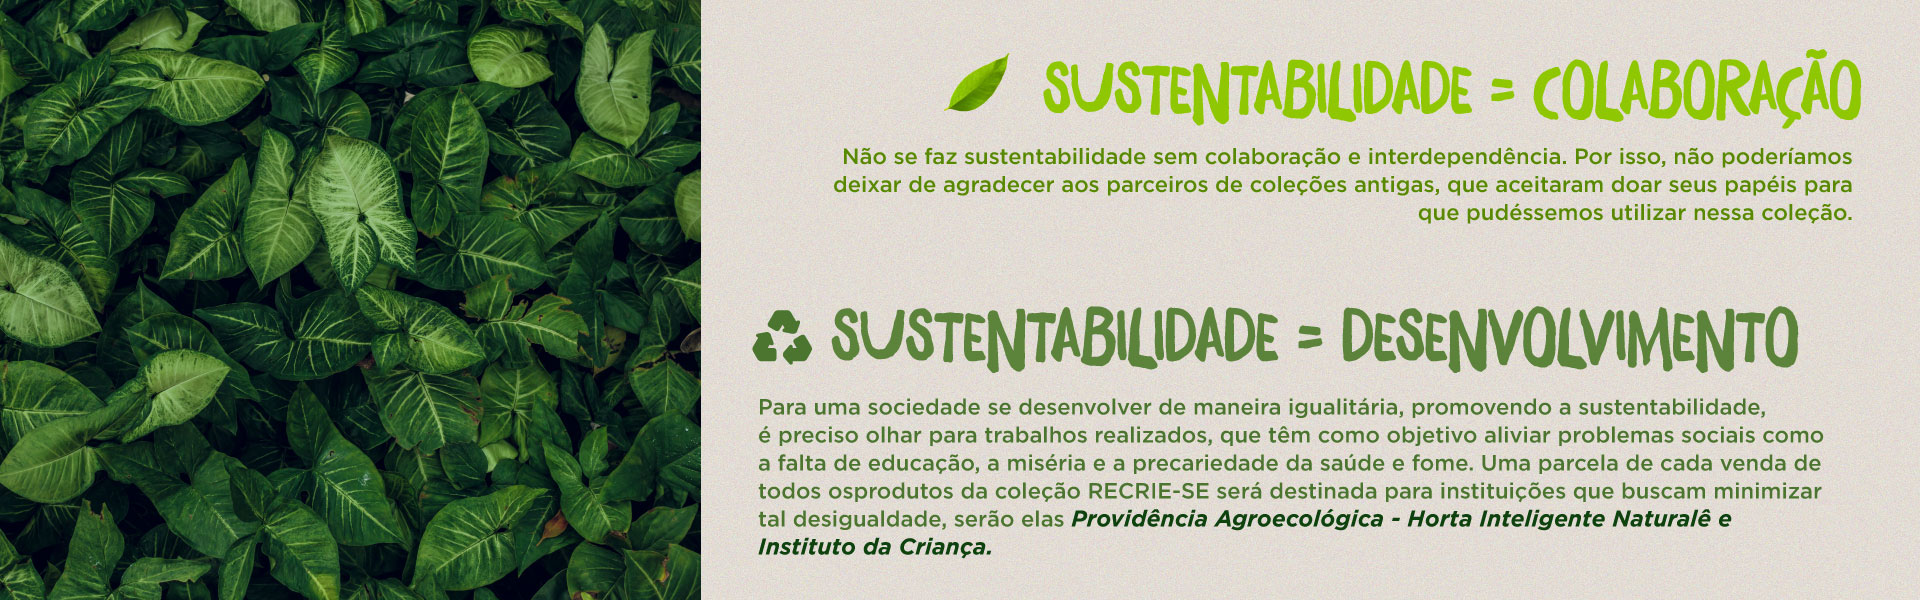 Banner: Sustentabilidade